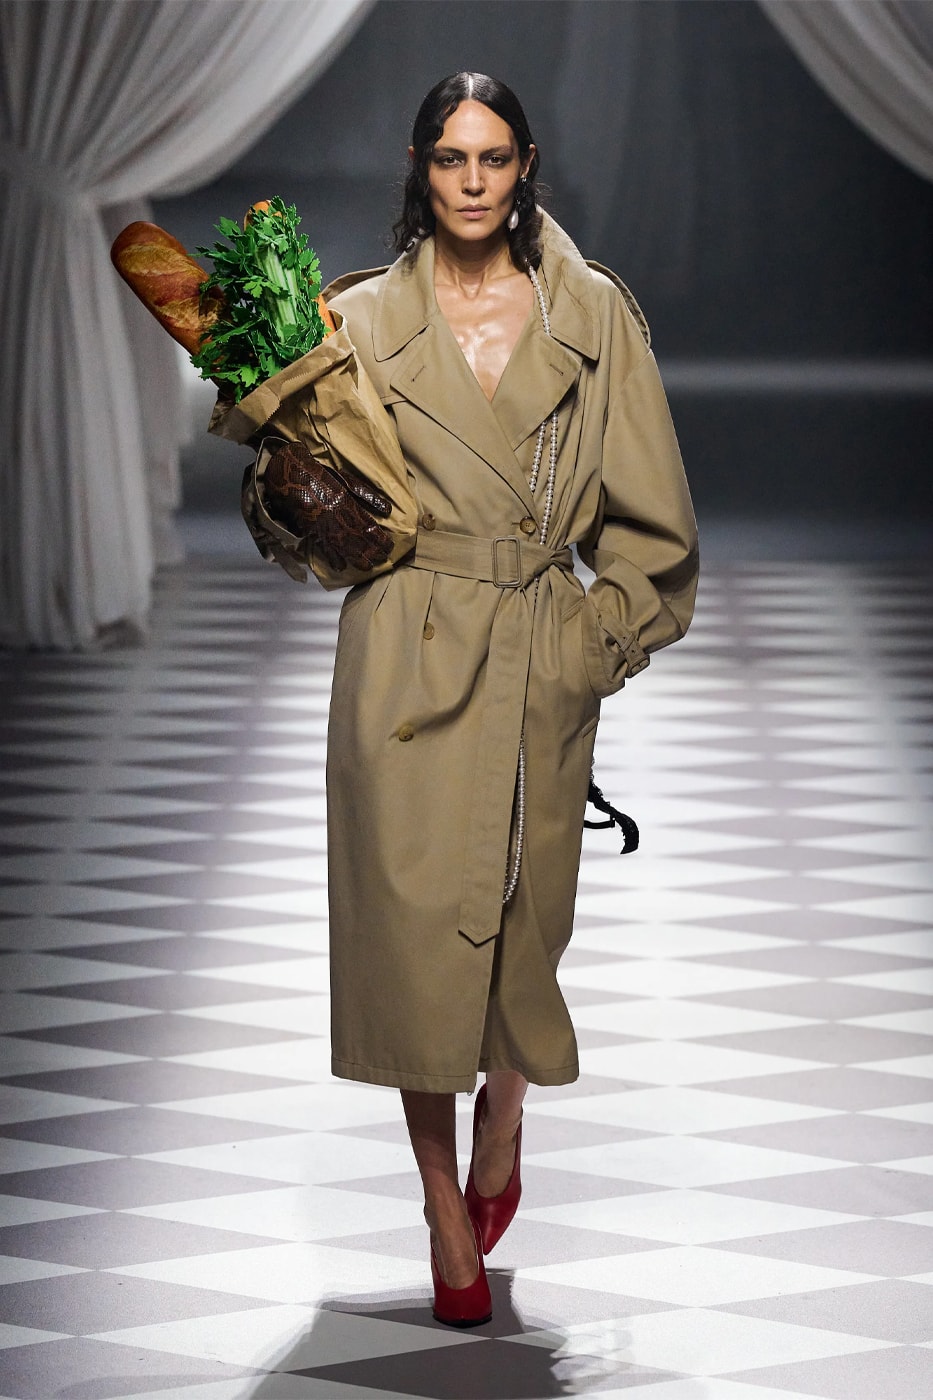 Milan Fashion Week 2023: No One Can Stop Talking About Miu Miu's